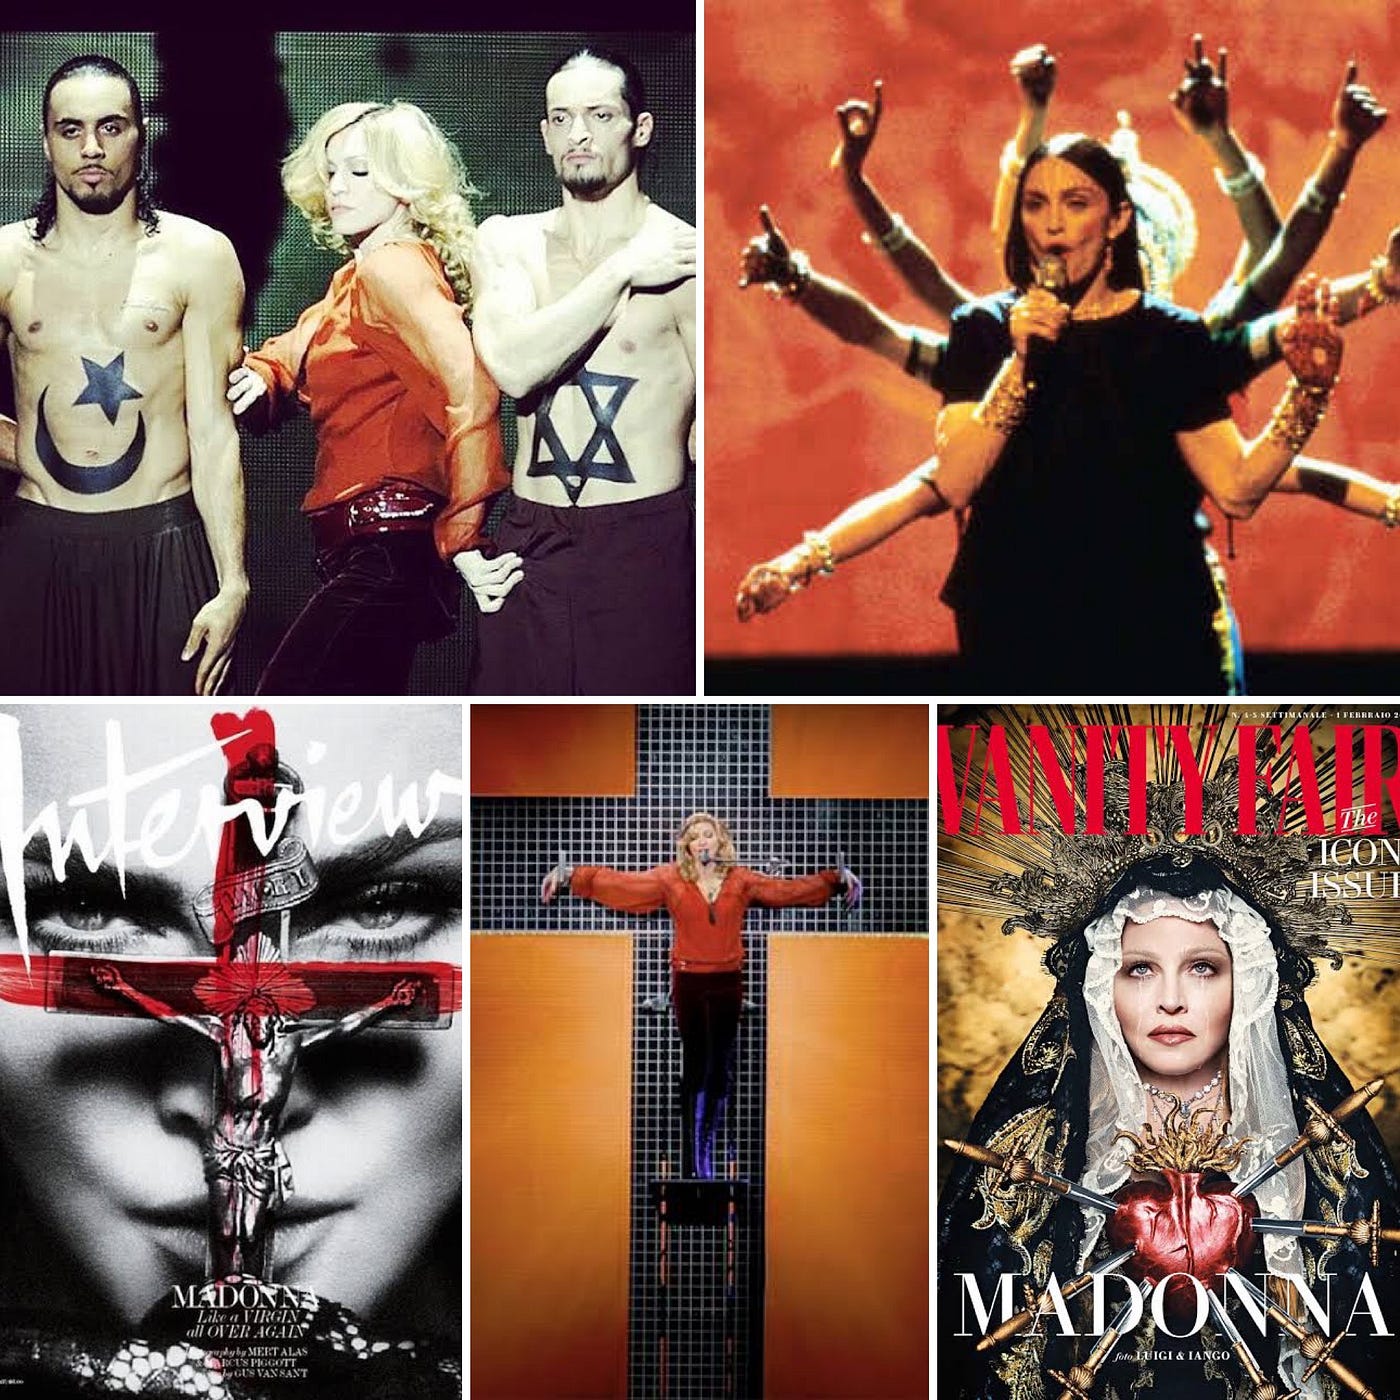 Madonna at the Met. by Sheldon Rocha Leal, by Sheldon Rocha Leal, PhD